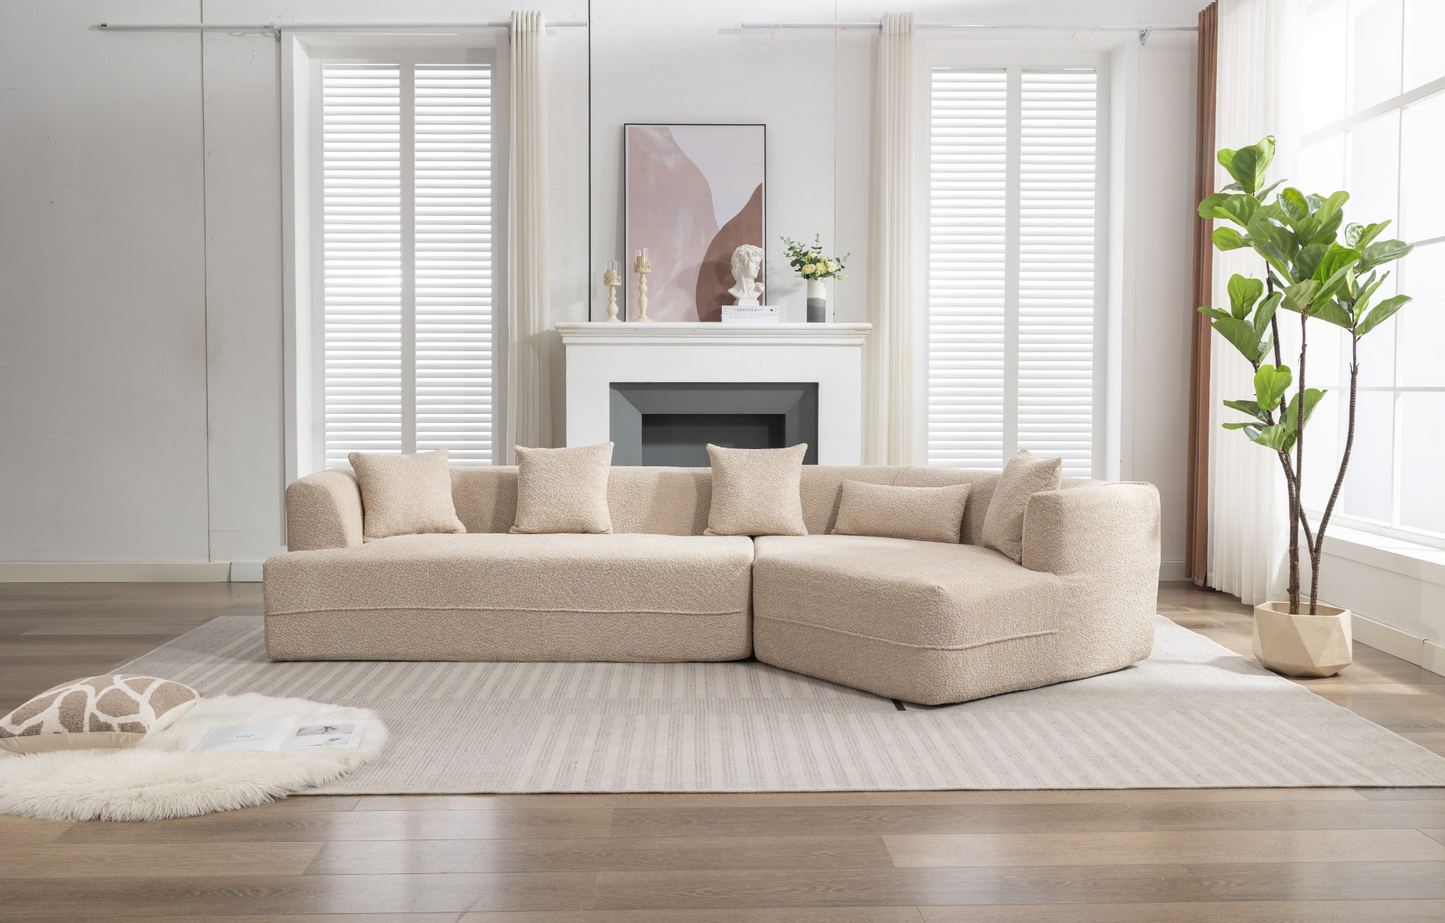 Modular Living room sofa set, modern minimalist style sofa, salon upholstered sleeper sofa, 2 PC free combination, round fiber fabric, anti-wrinkle fabric,  Brown, Goodies N Stuff